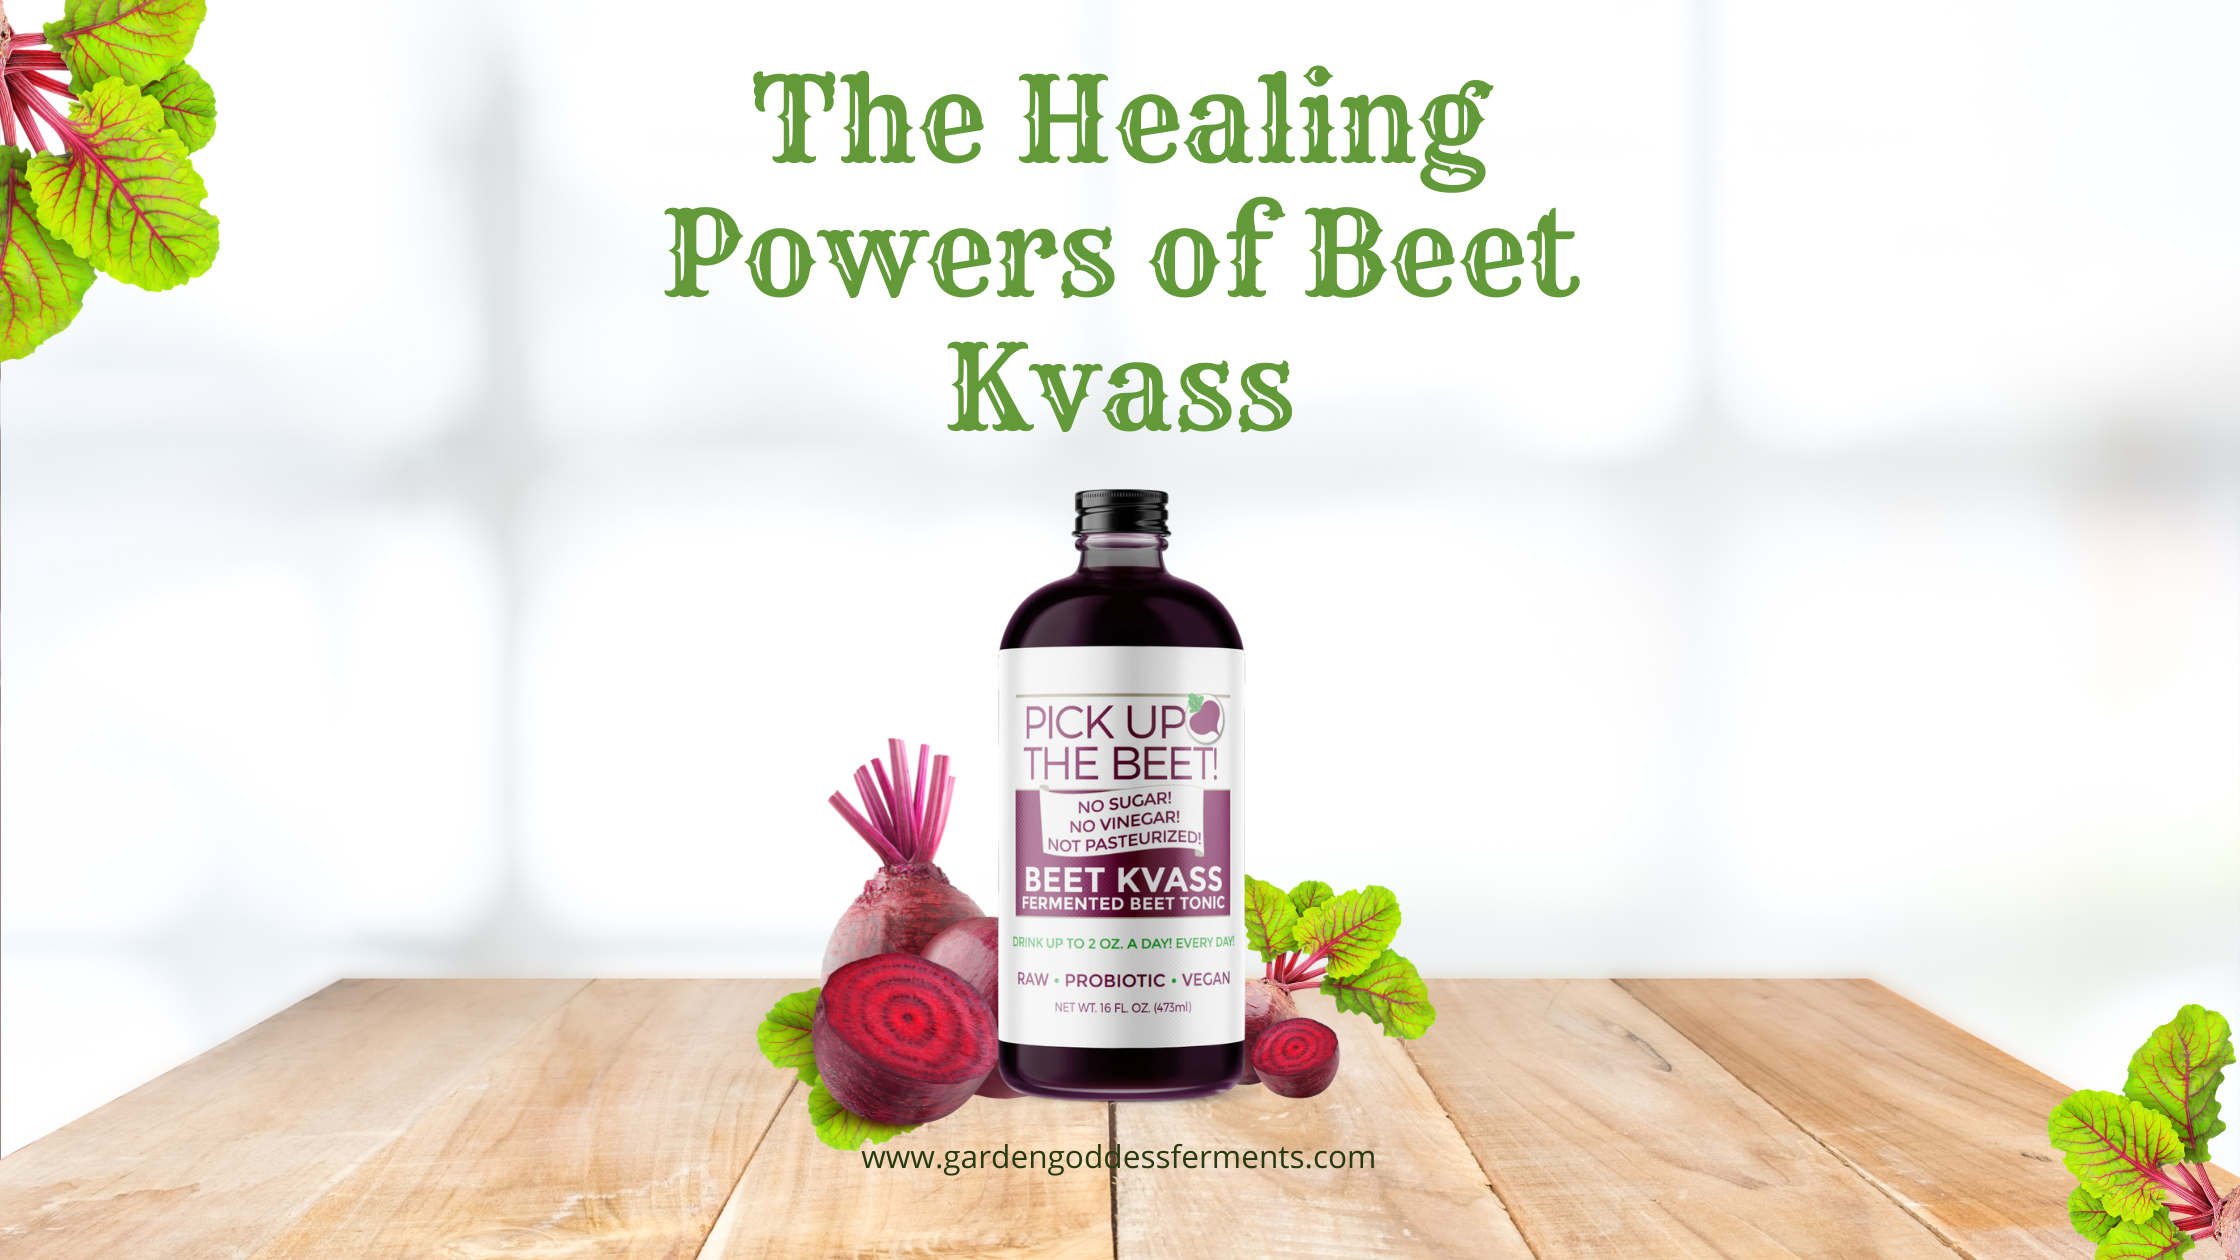 Revitalizing Tonic: The Healing Powers of Beet Kvass